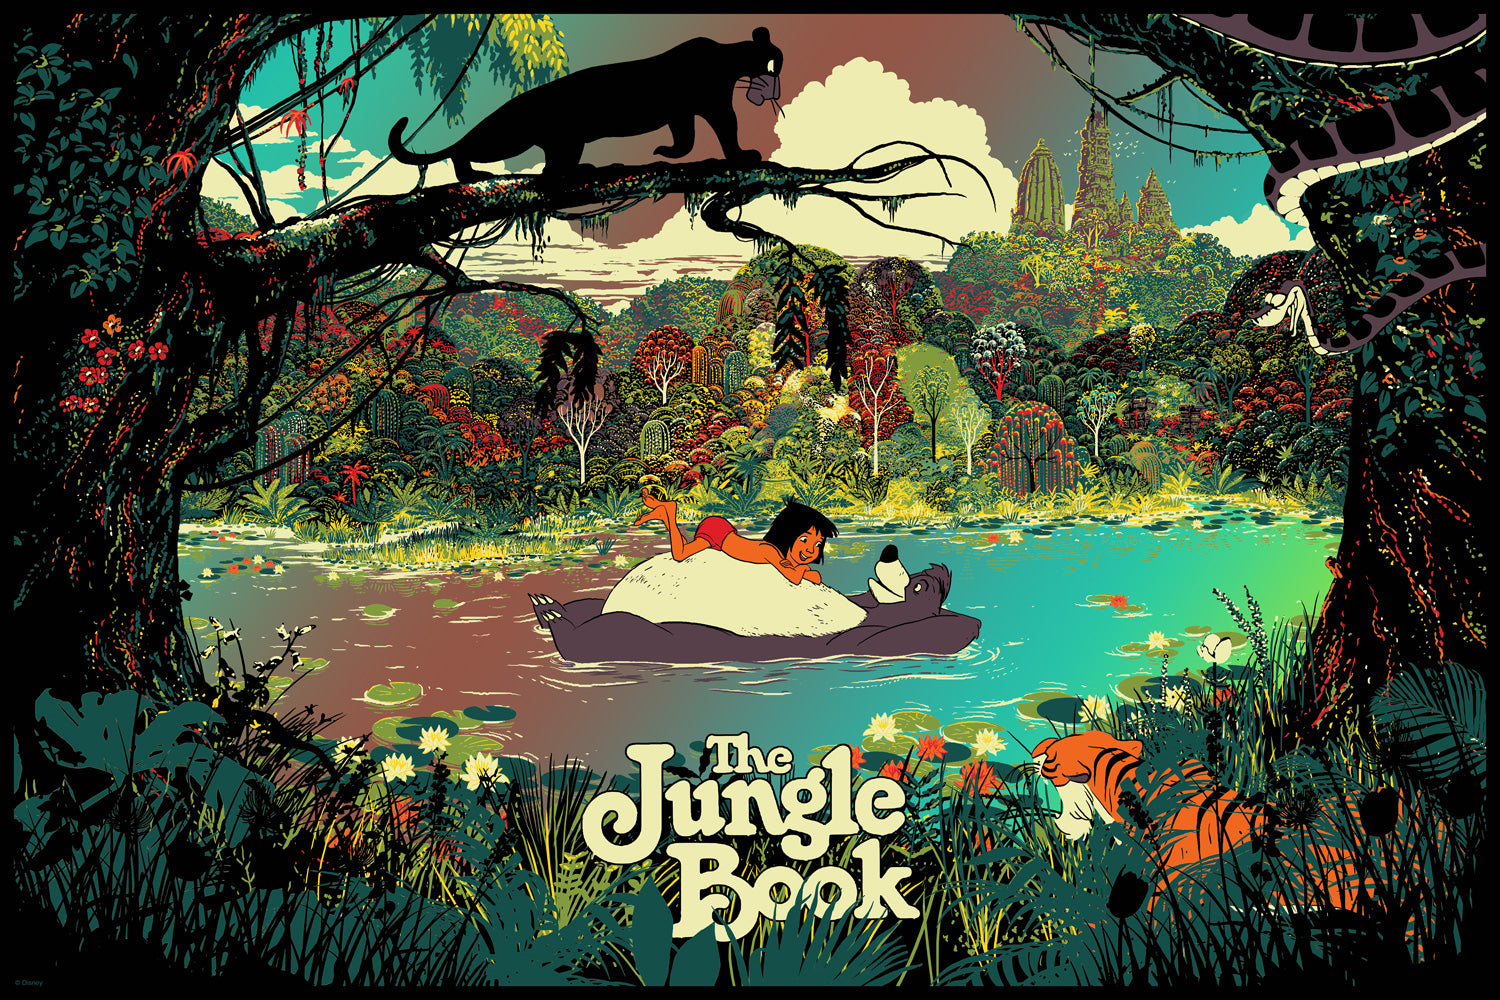 Jungle_book_final_aw_foil_1500x1000.jpg